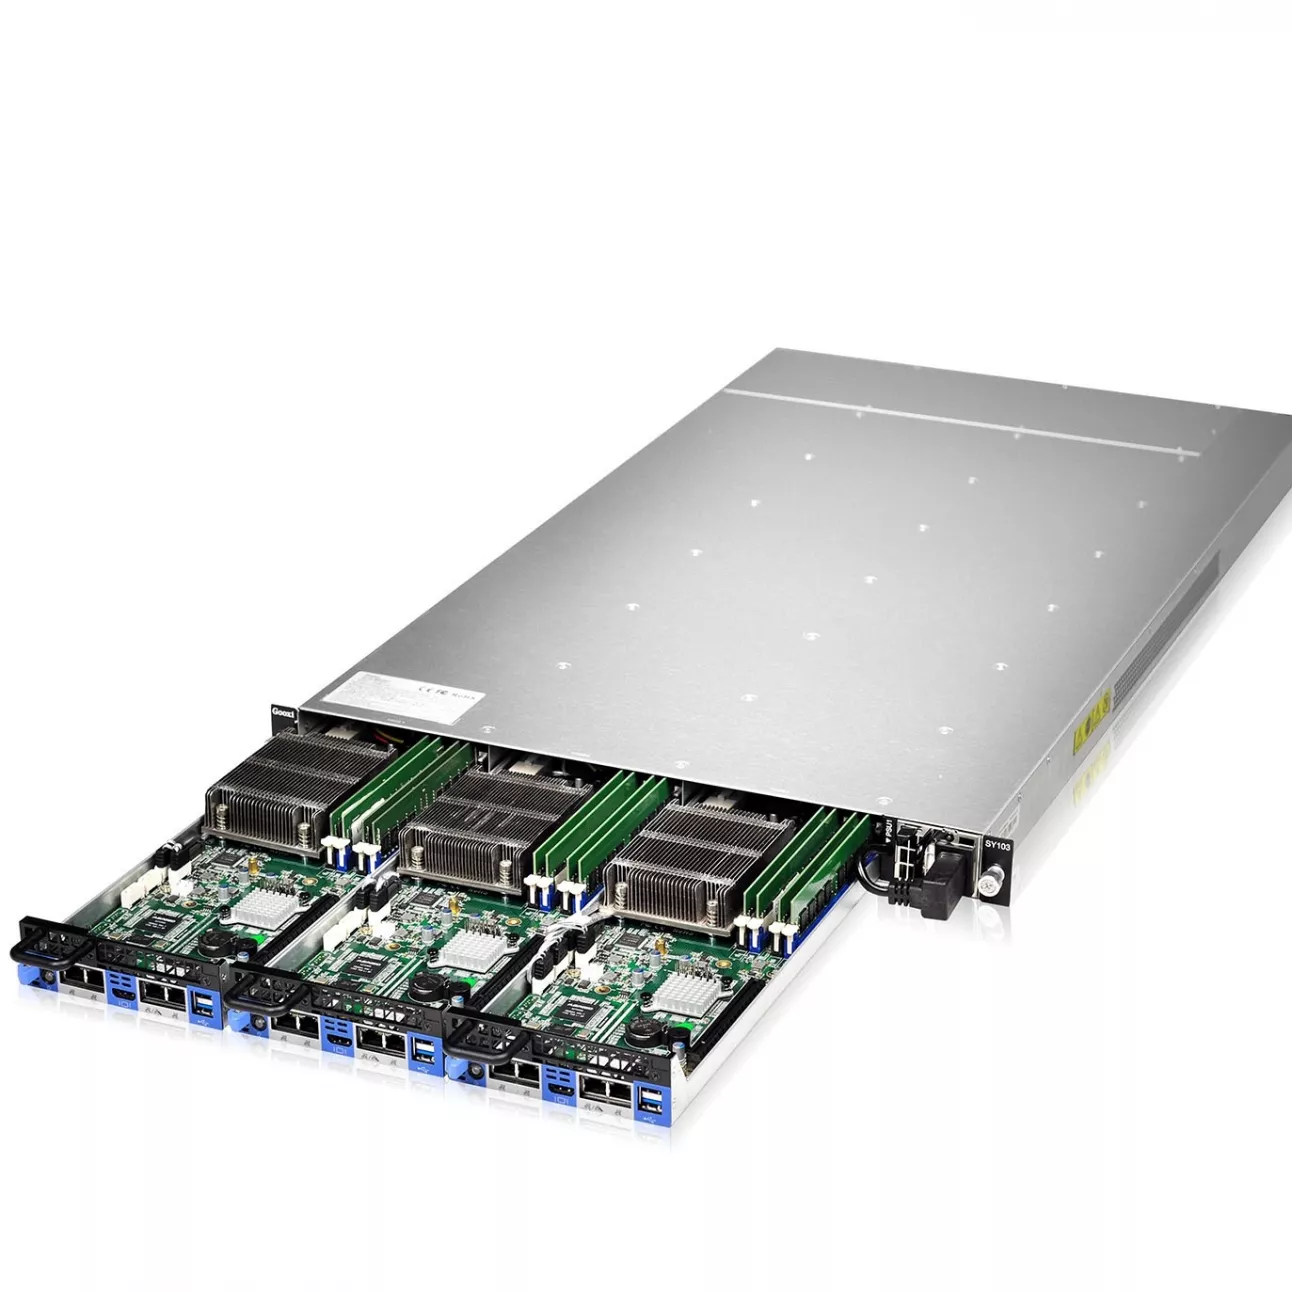 Серверная платформа 1U Barebone ,3*Nodes,6*HDD trays,Single Socket Xeon LGA1150 E3-1200v3/v4MB,500W DELTA PSU,Heatsink,Slide Rail